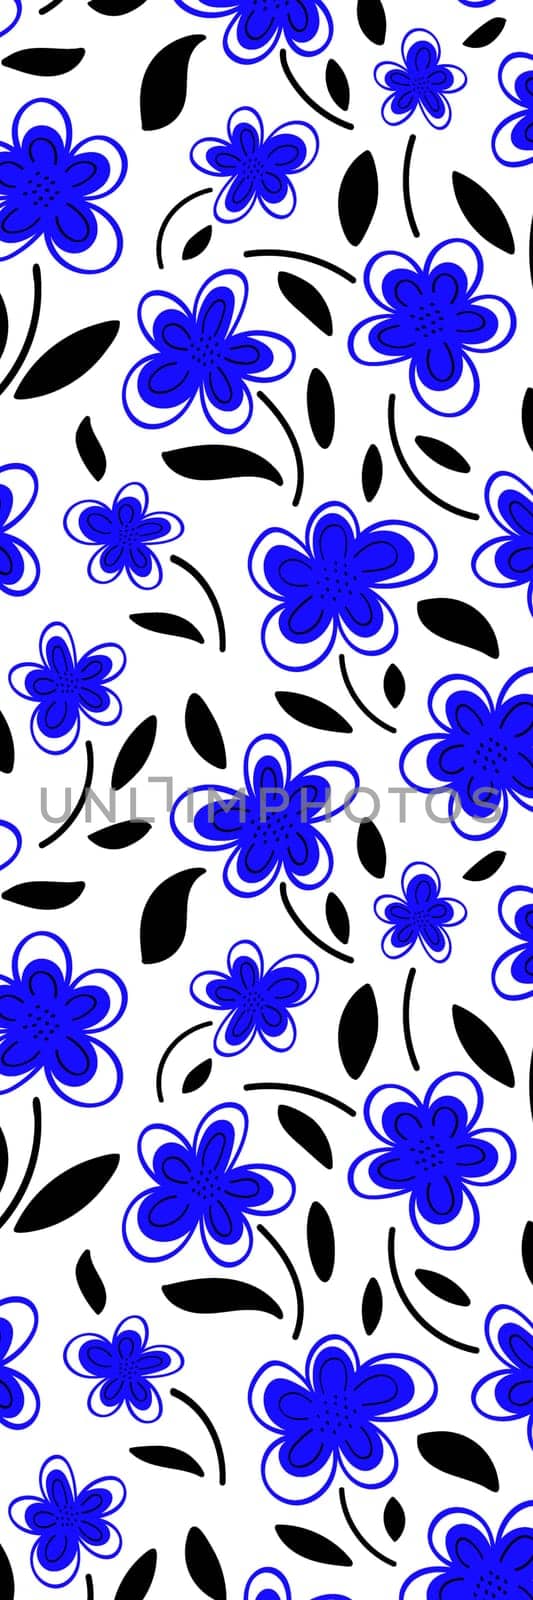 Black blue spring flowers pattern bookmark by Dustick